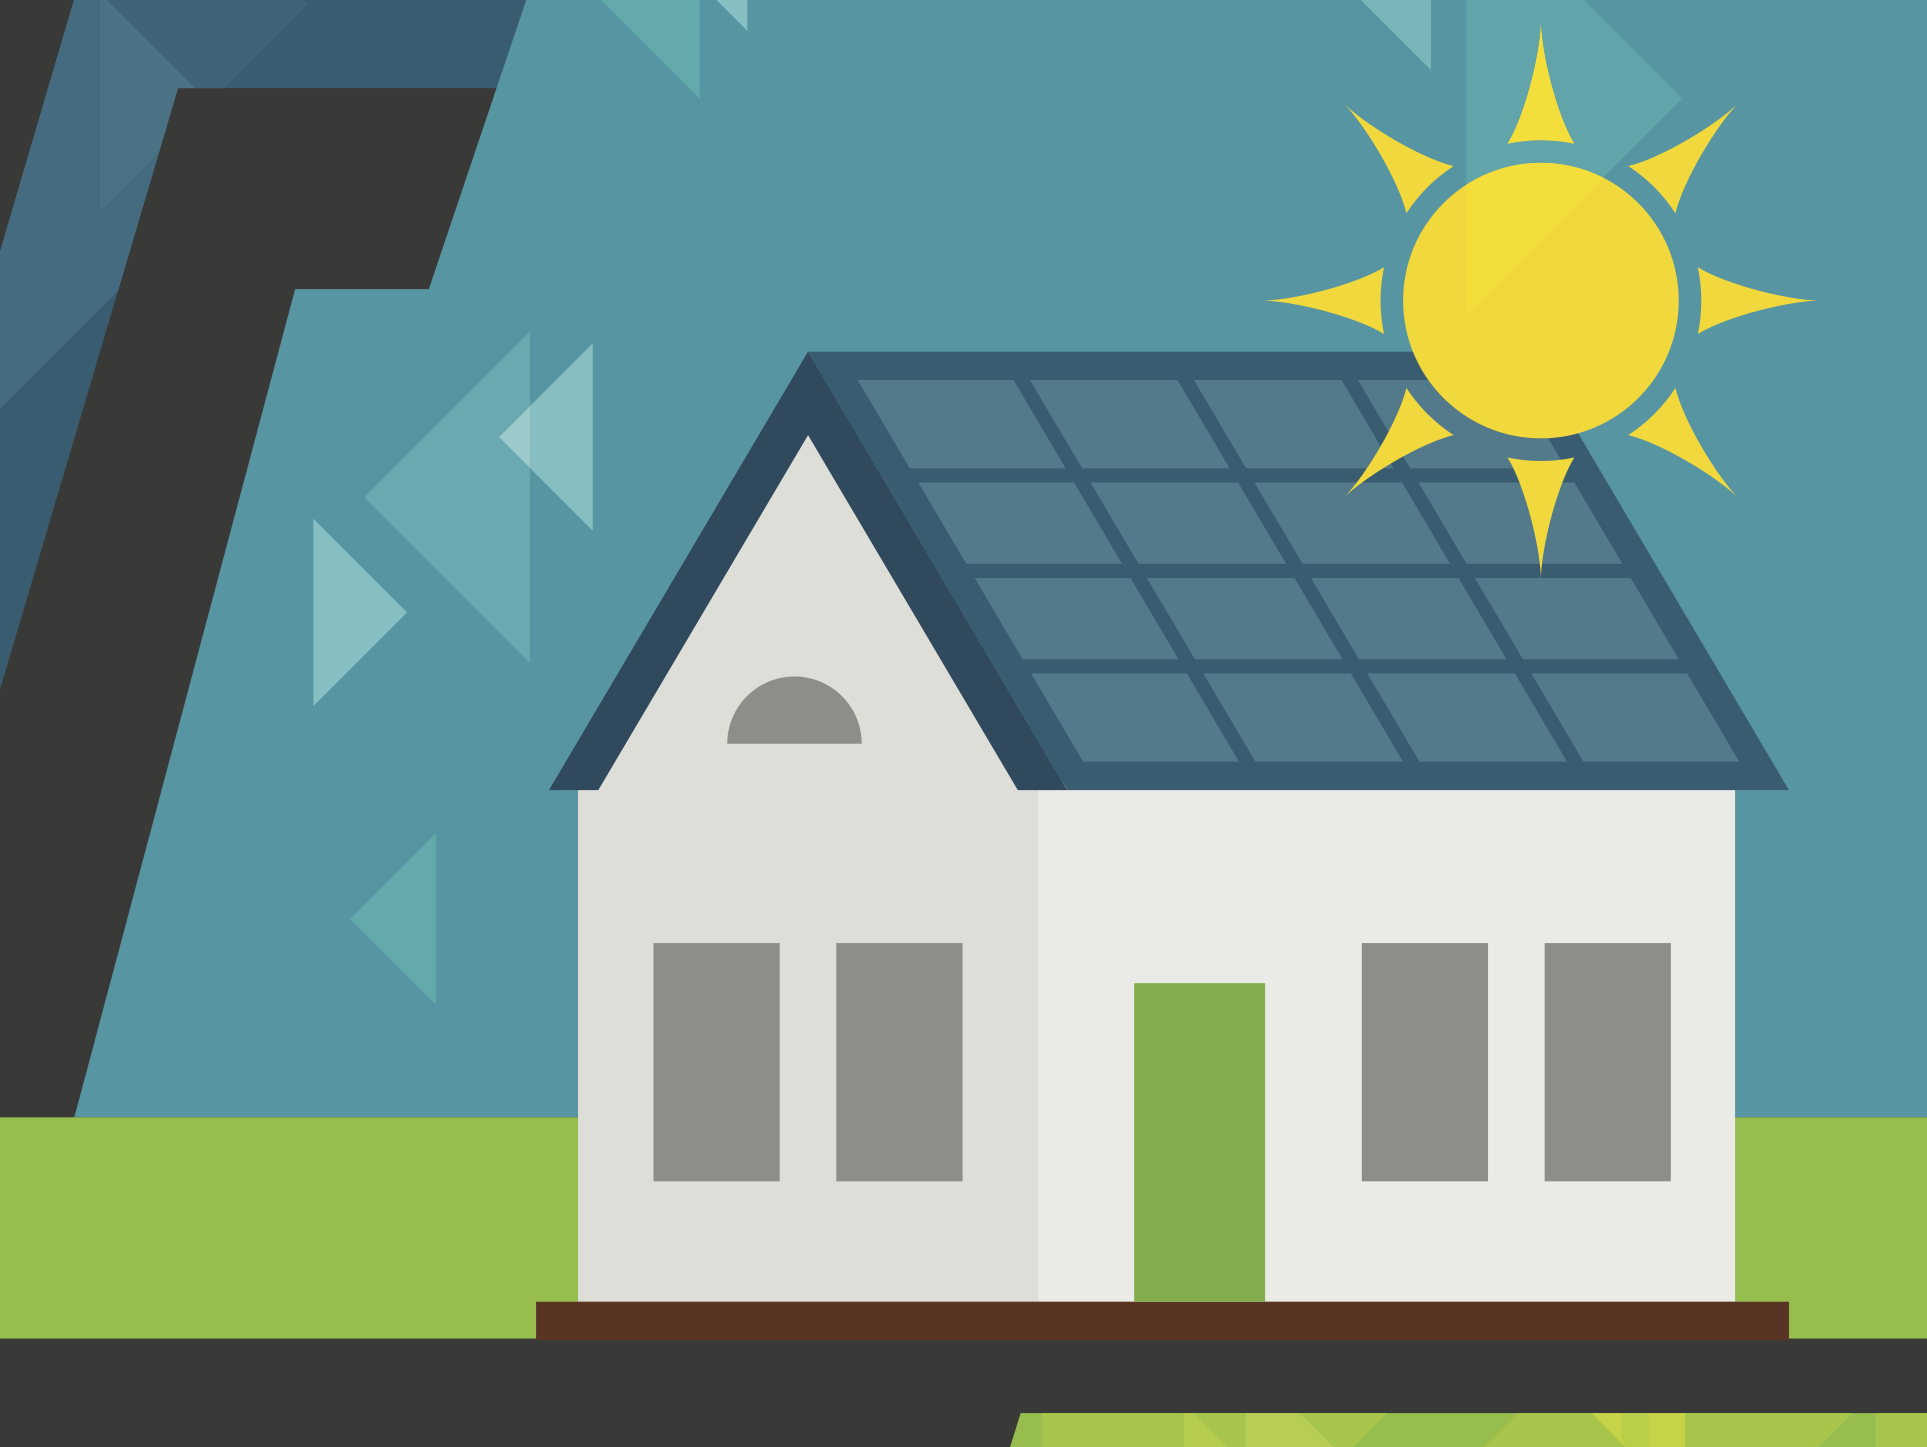 SOLAR OPTIMUM’S FREE SOLAR SAVINGS REPORT SHEDS LIGHT ON ENERGY SAVINGS FOR YOUR HOME